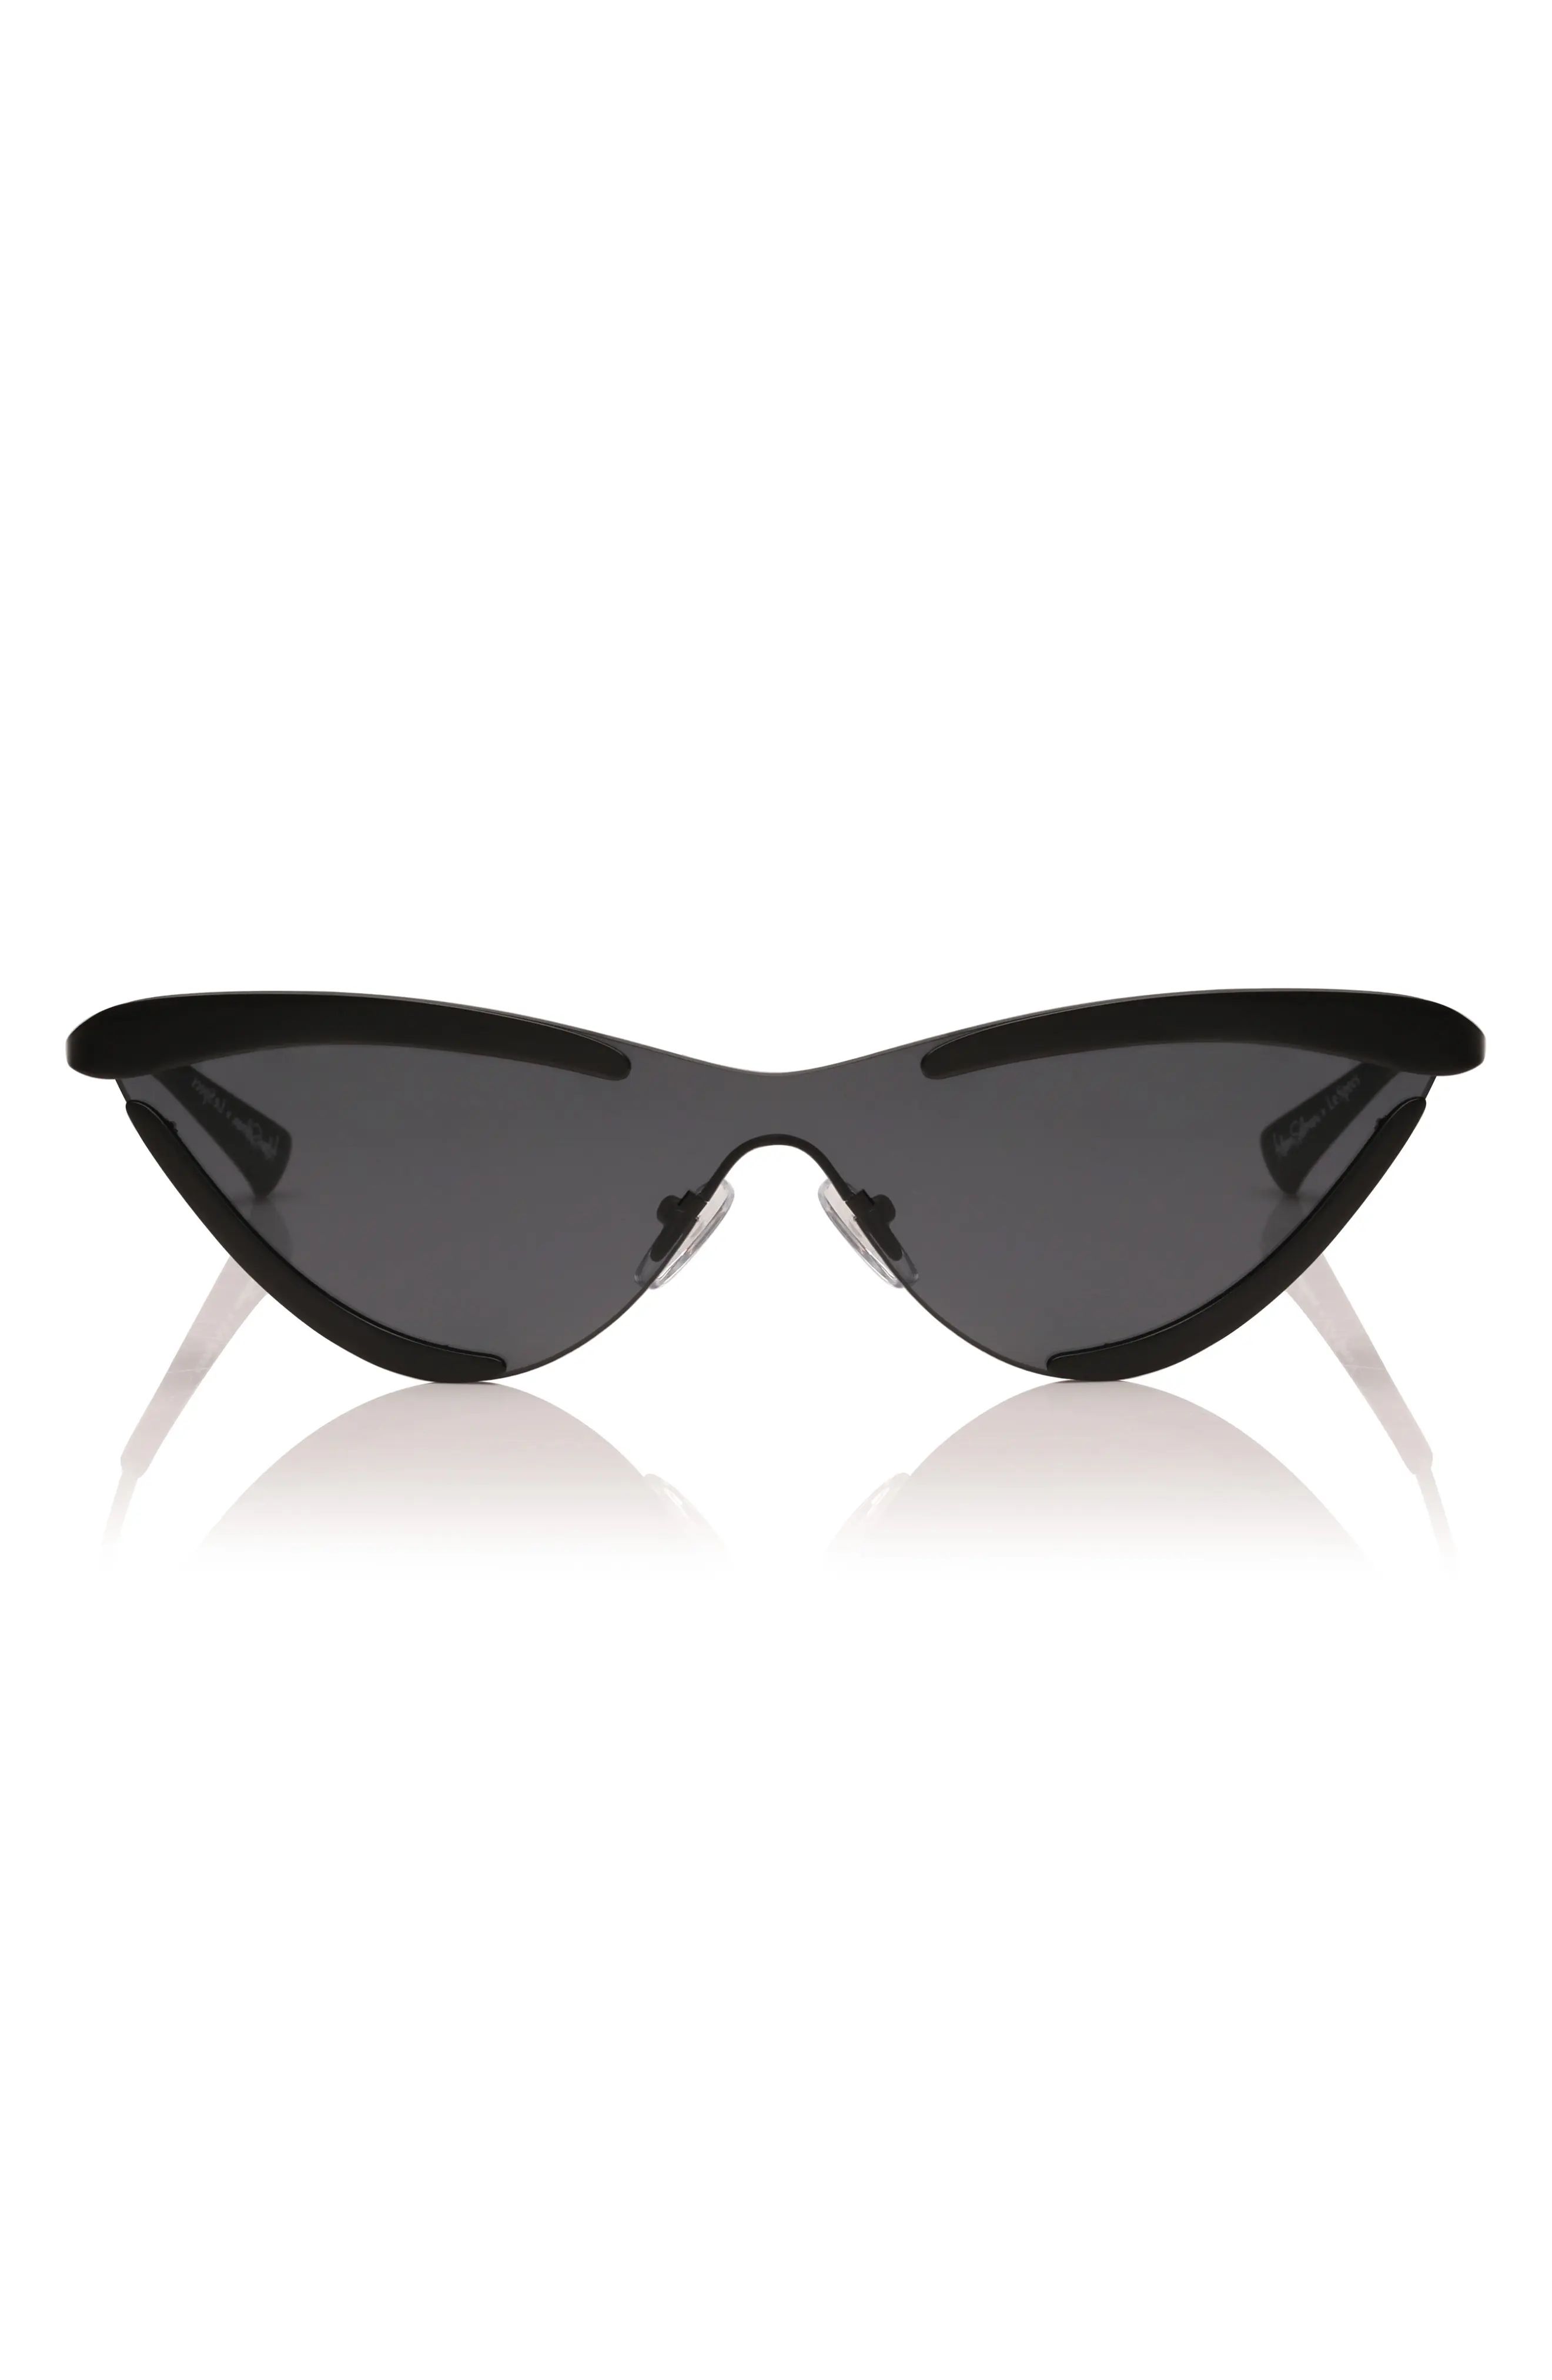 Adam Selman x Le Specs The Scandal 142mm Cat Eye Sunglasses | Nordstrom